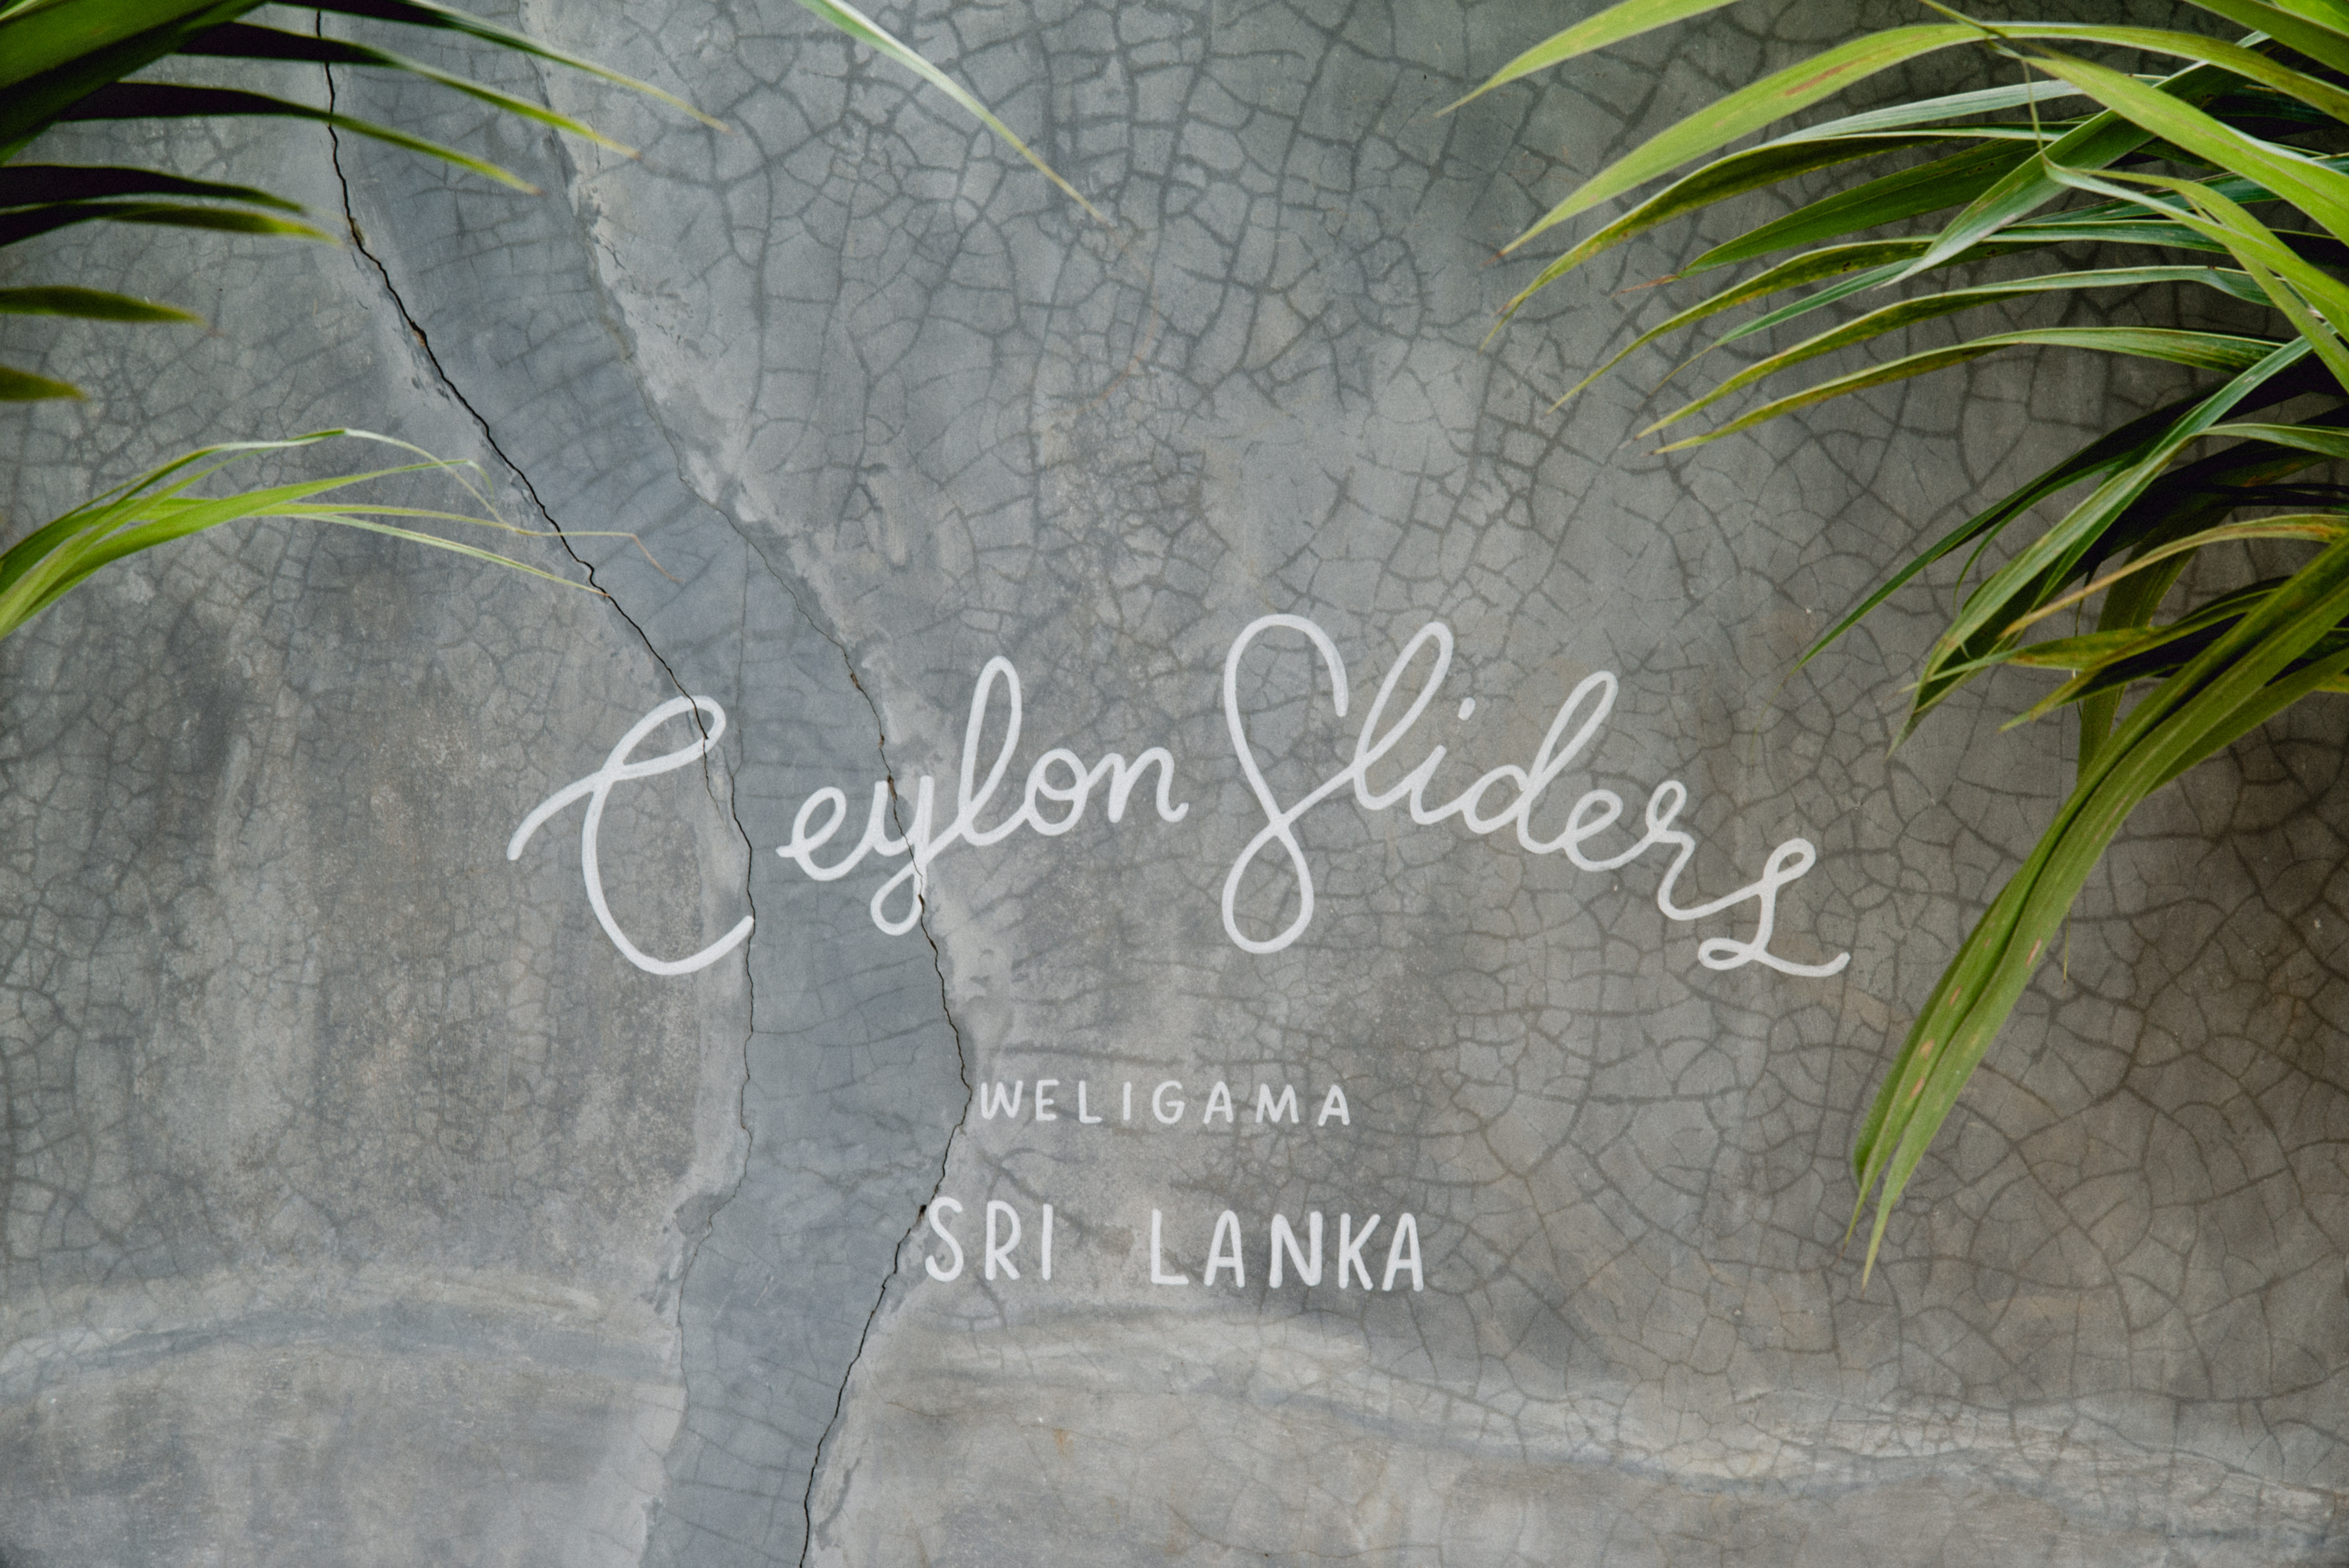 café Ceylon sliders